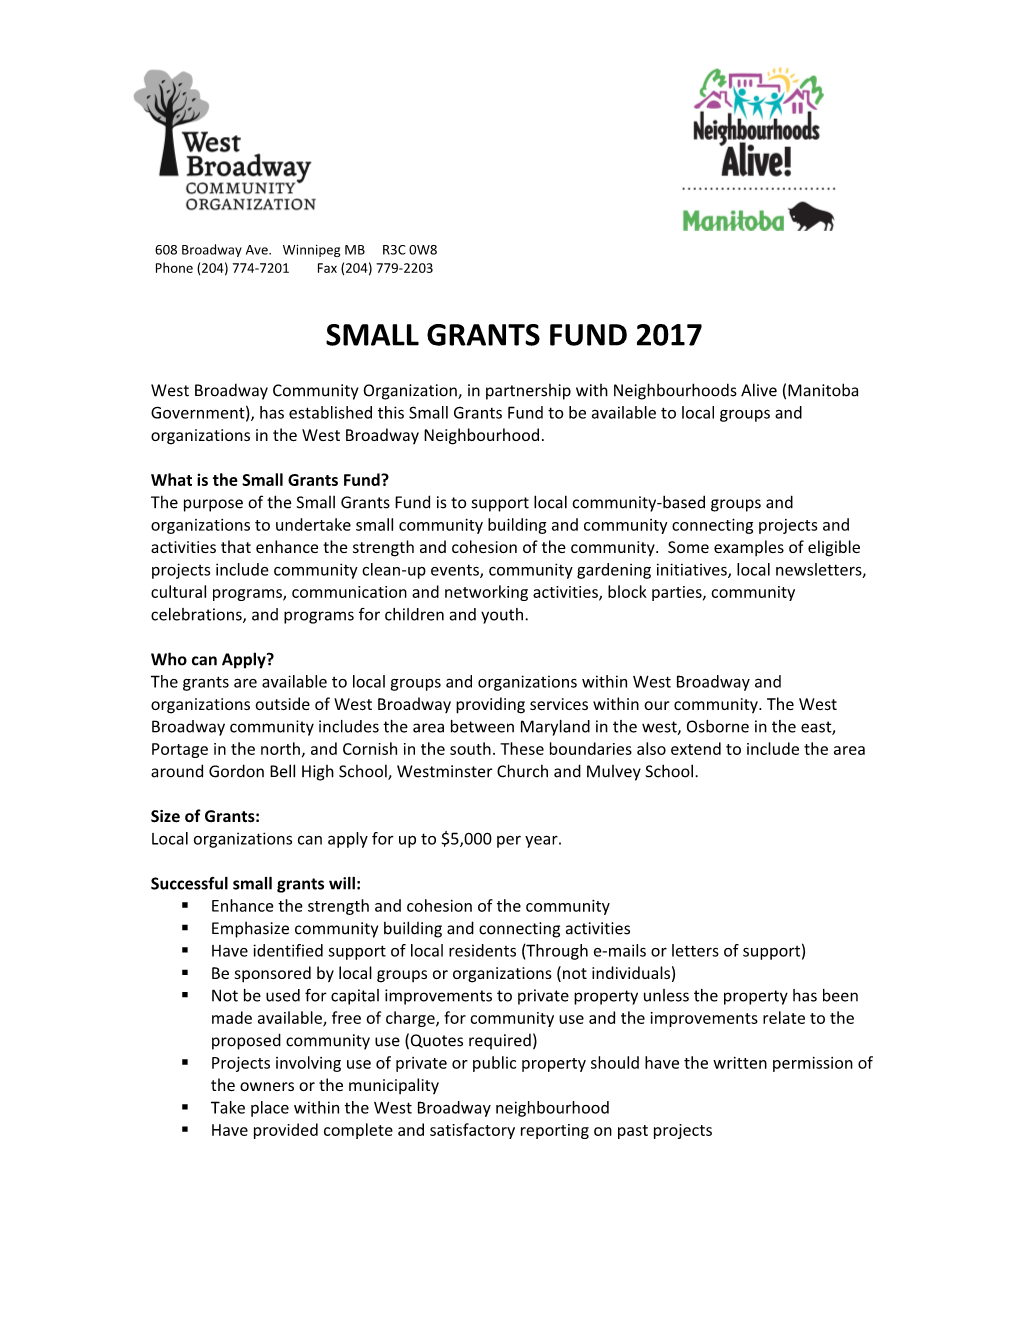 Small Grants Fund 2017